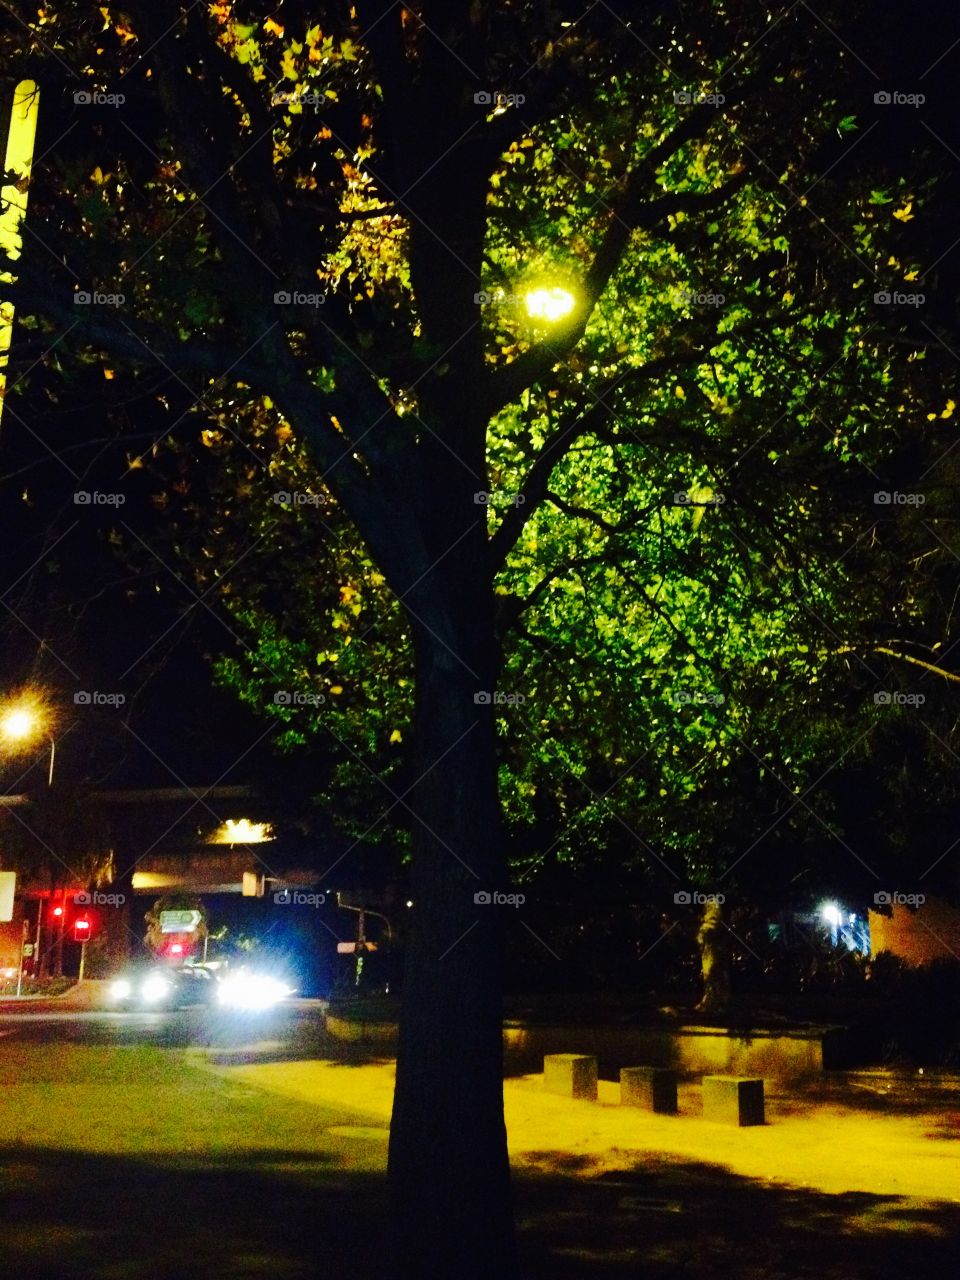 #FoapMarch17 picmas                      Urban light at night